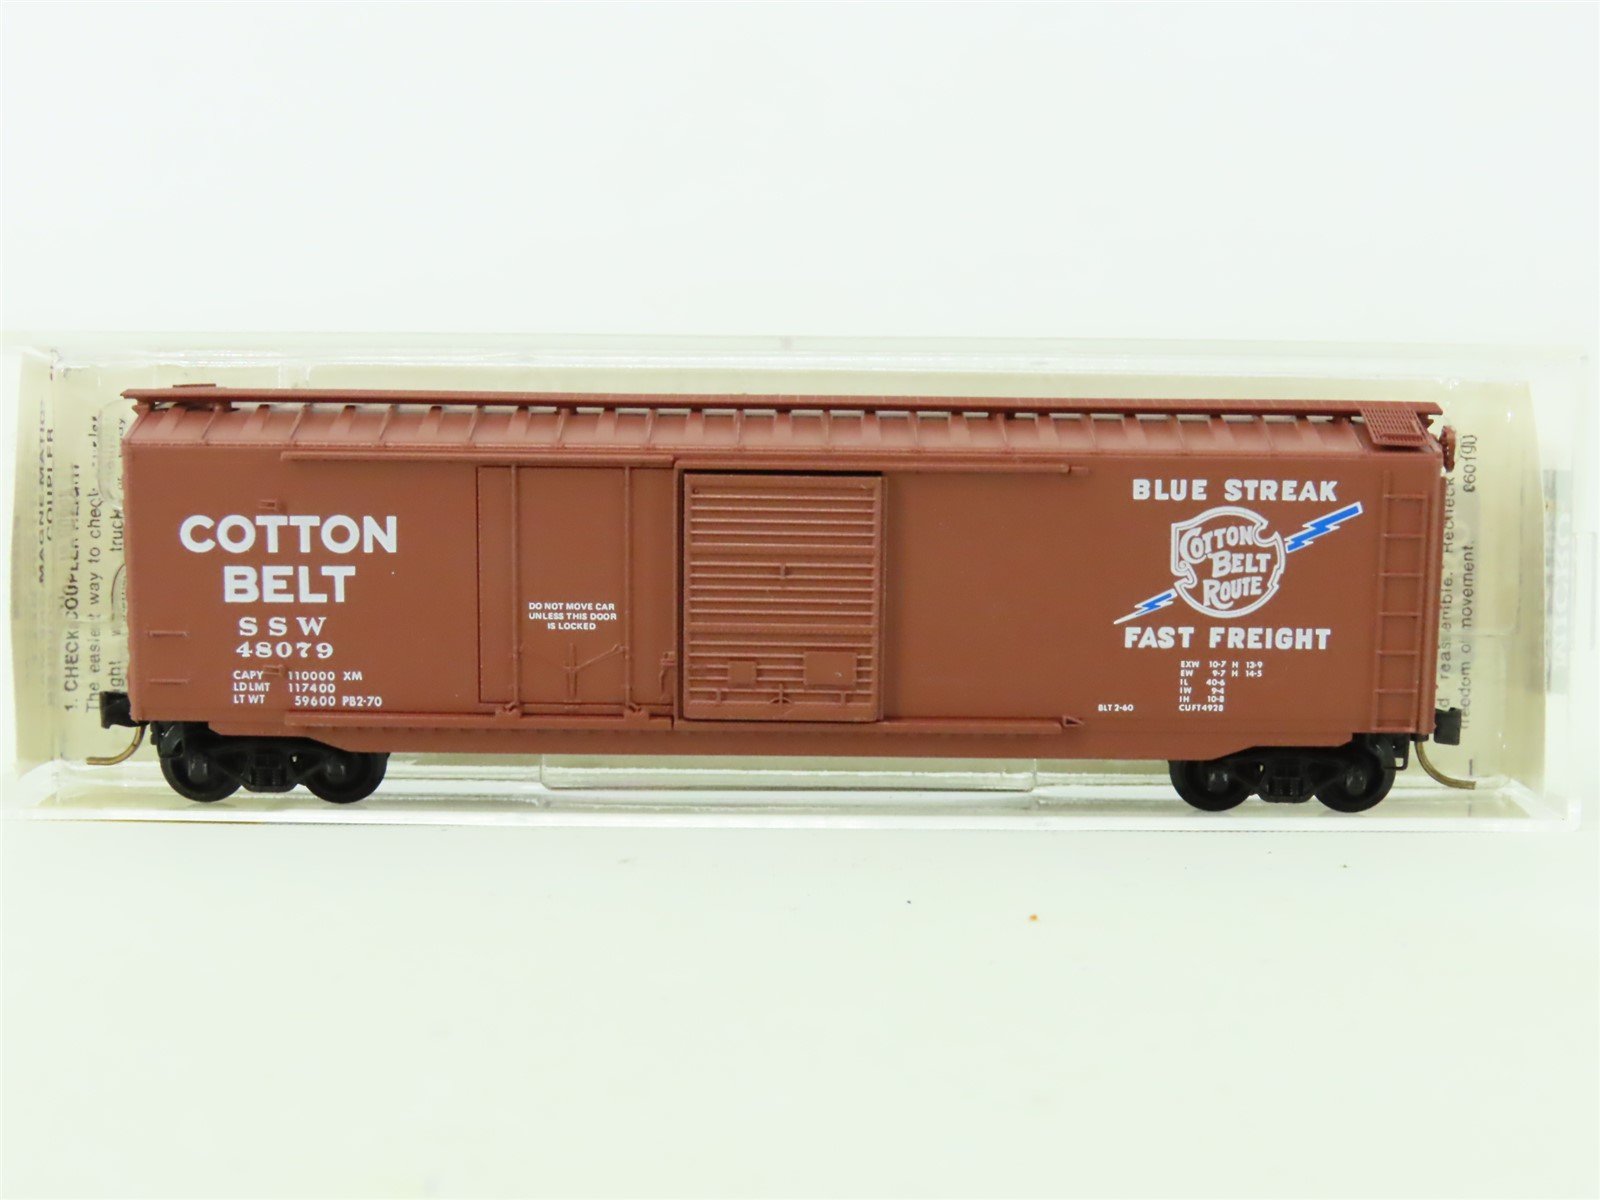 N Scale Micro-Trains MTL #33060 SSW Cotton Belt "Blue Streak" 50' Box Car #48079